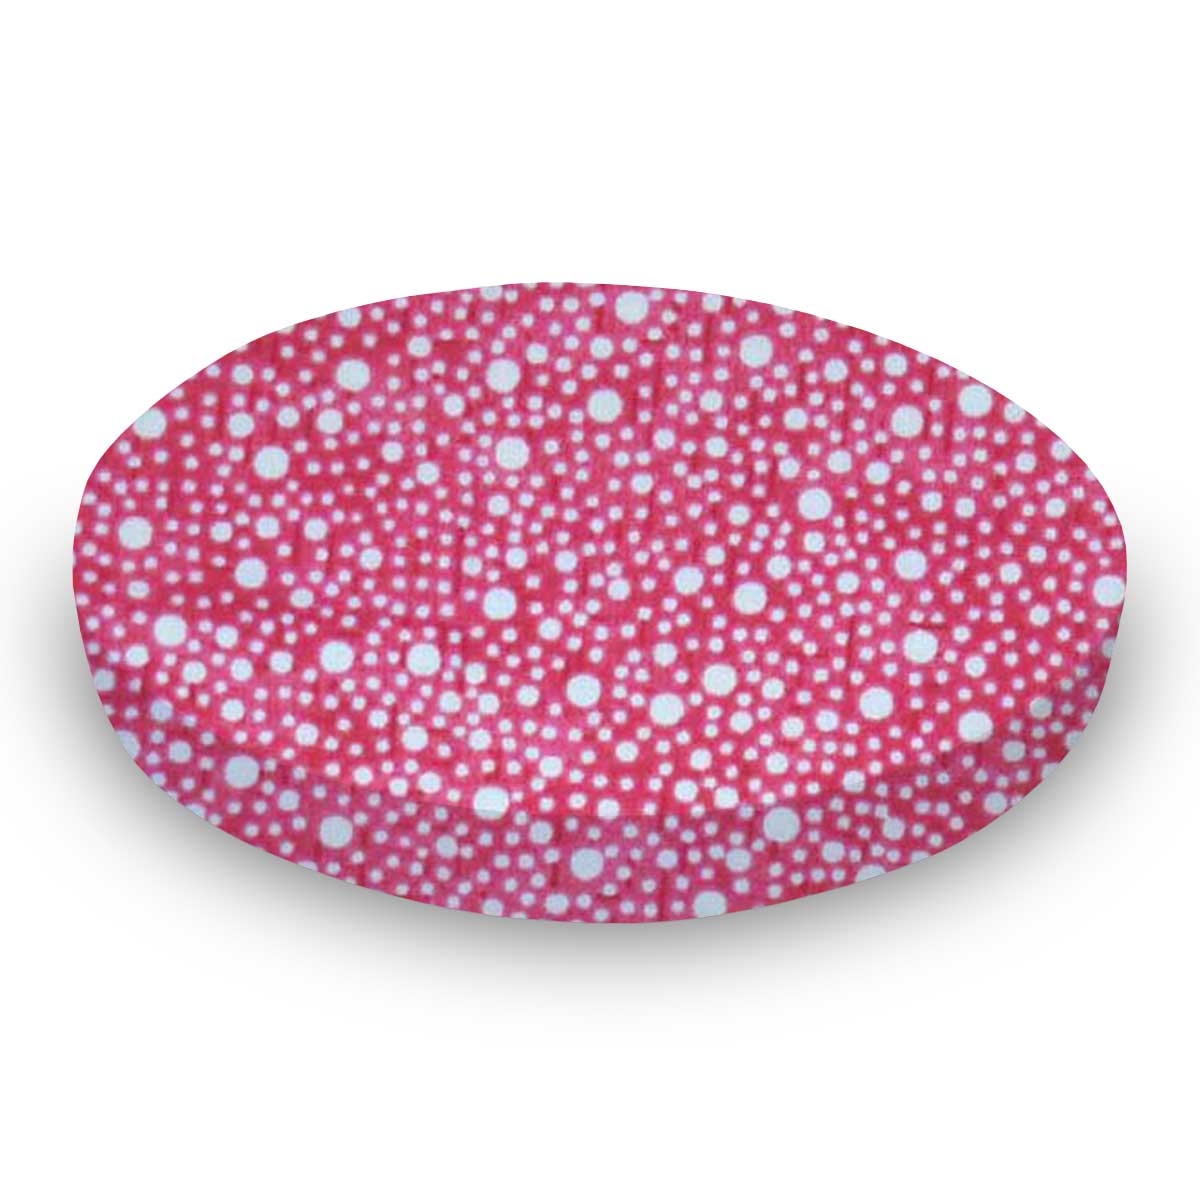 SK-W1117 Oval Crib (Stokke Sleepi) - Confetti Dots Hot Pink sku SK-W1117